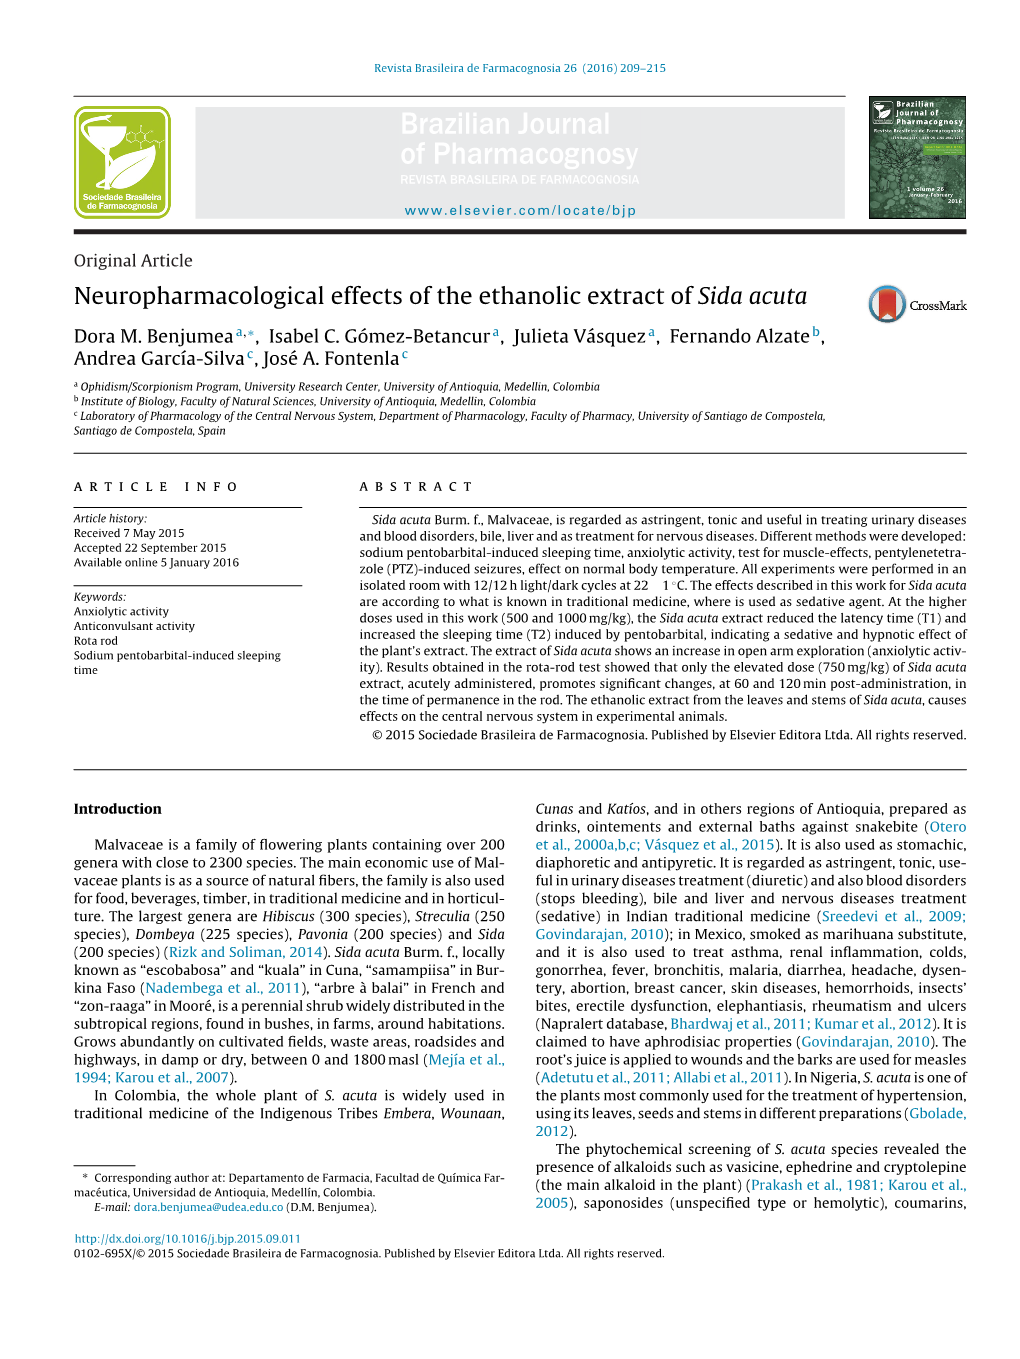 Neuropharmacological Effects of the Ethanolic Extract of Sida Acuta